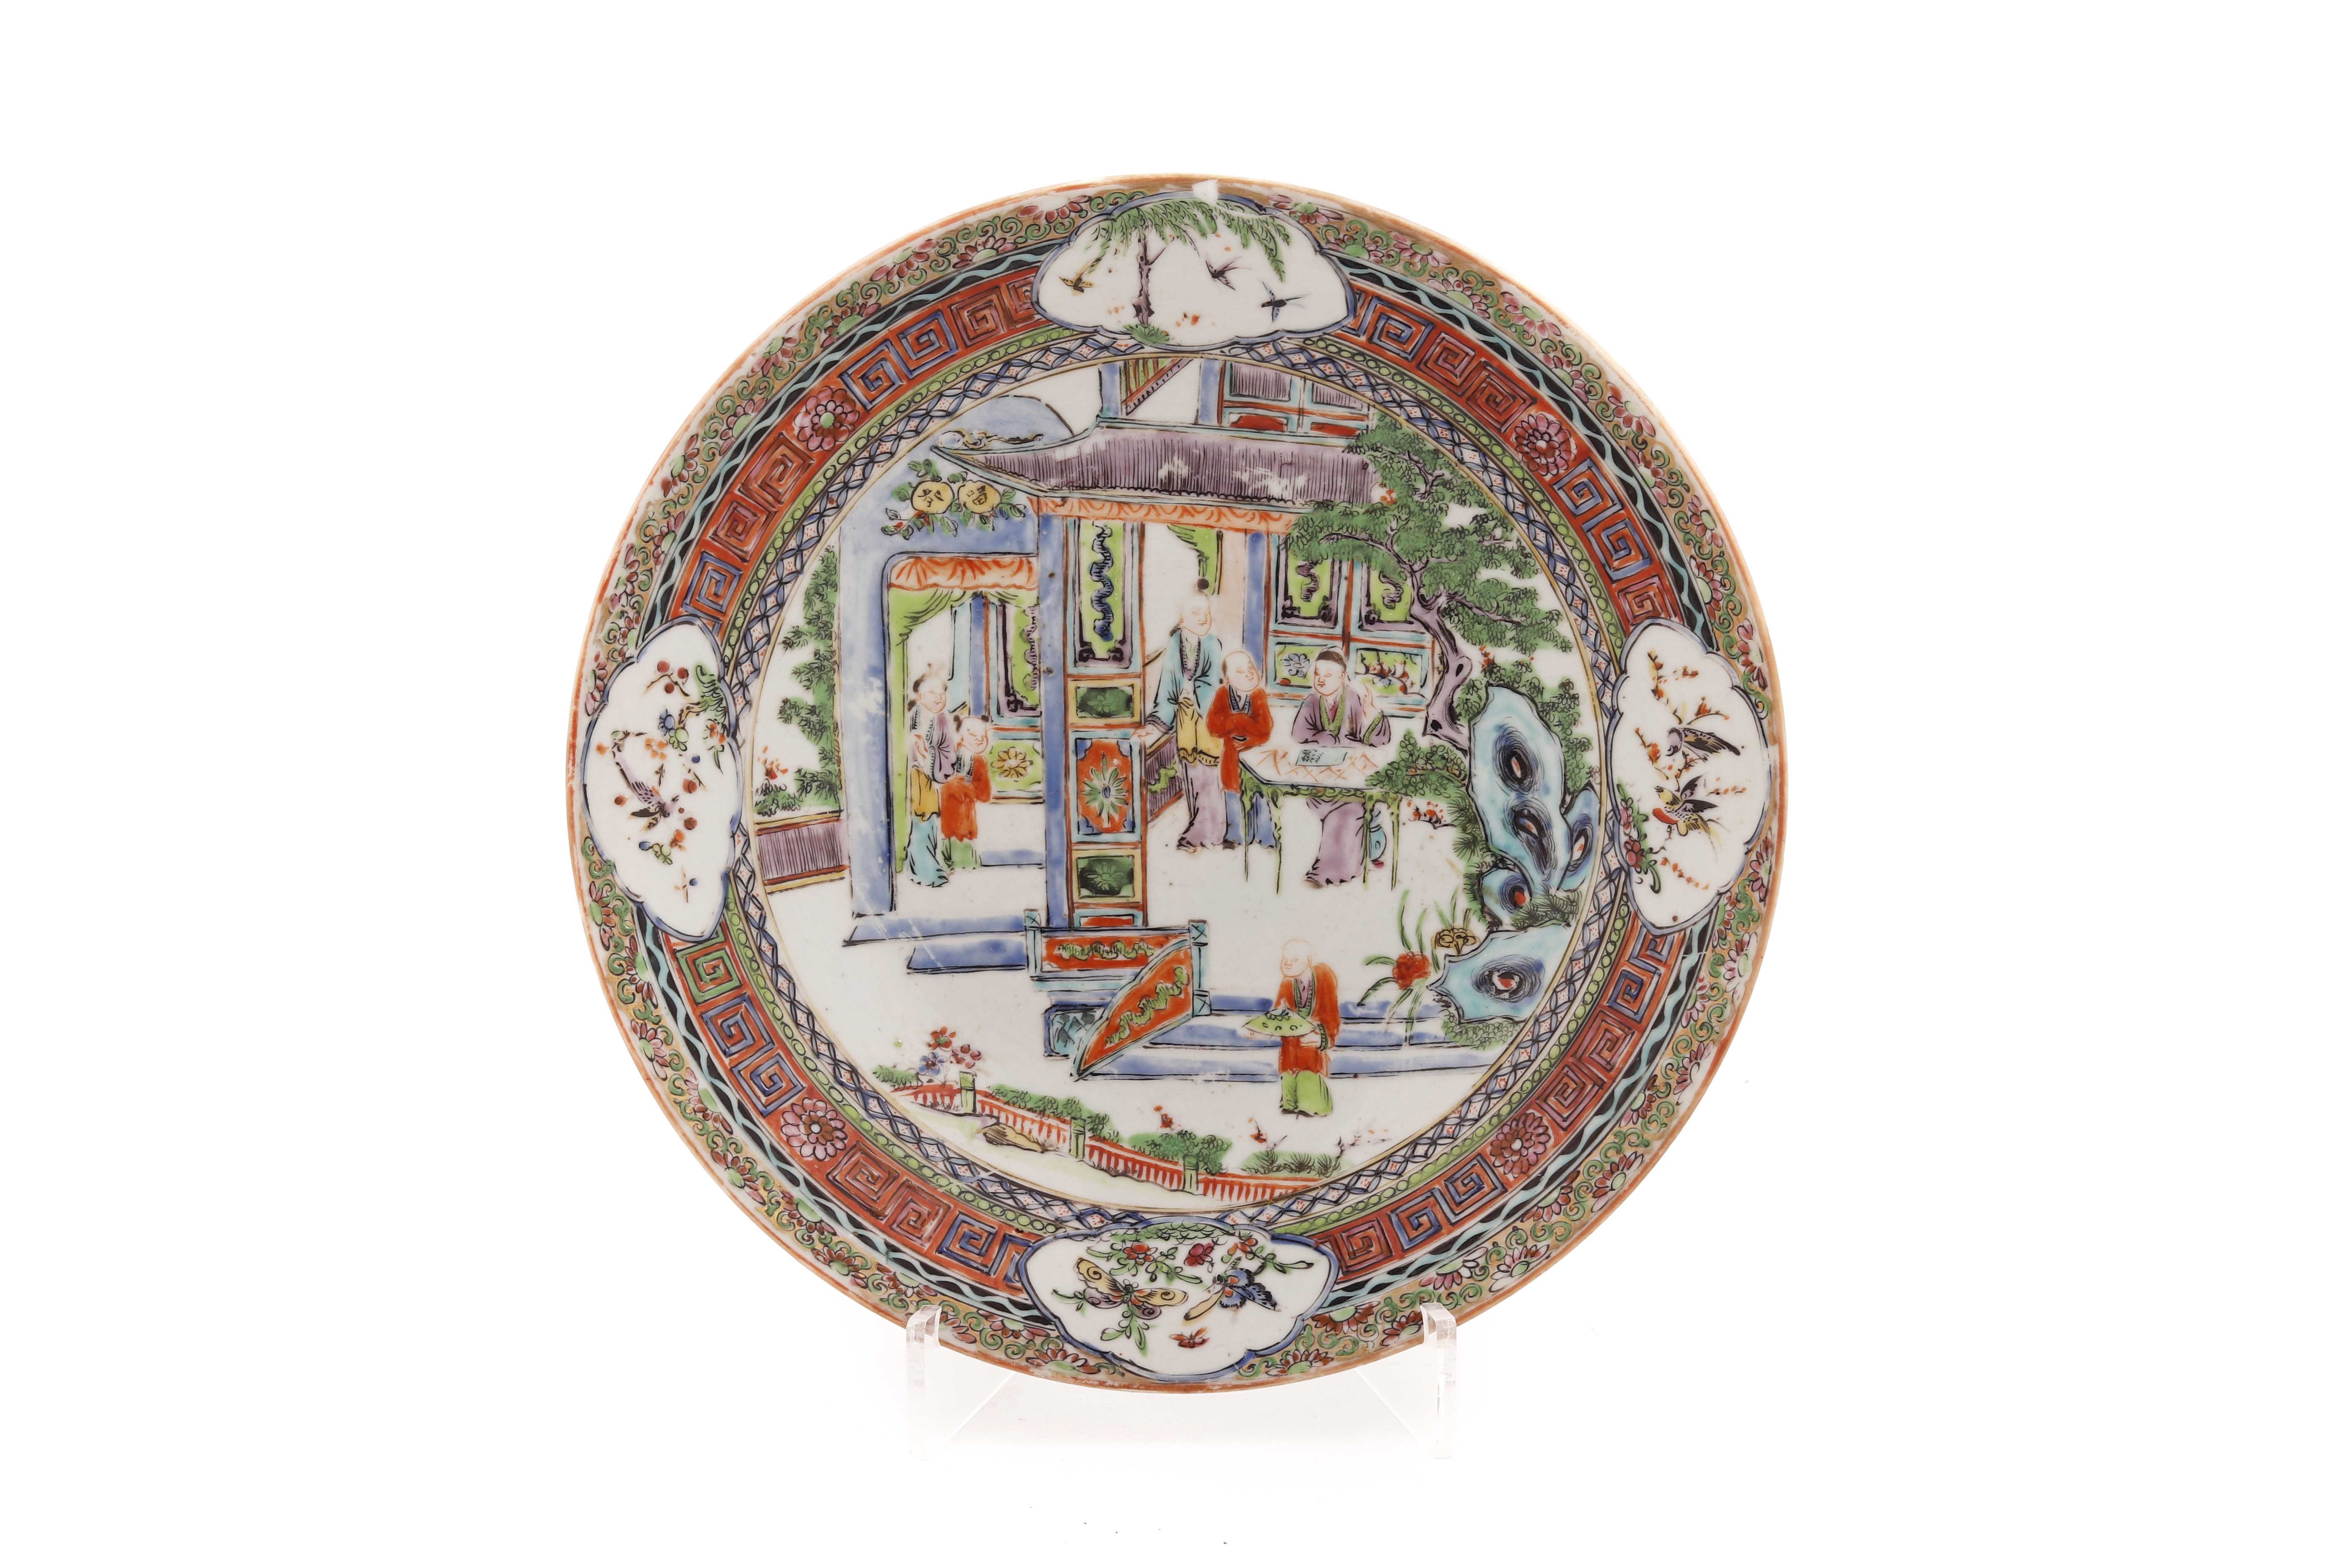 Prato em porcelana chinesa, séc. XIX/XX